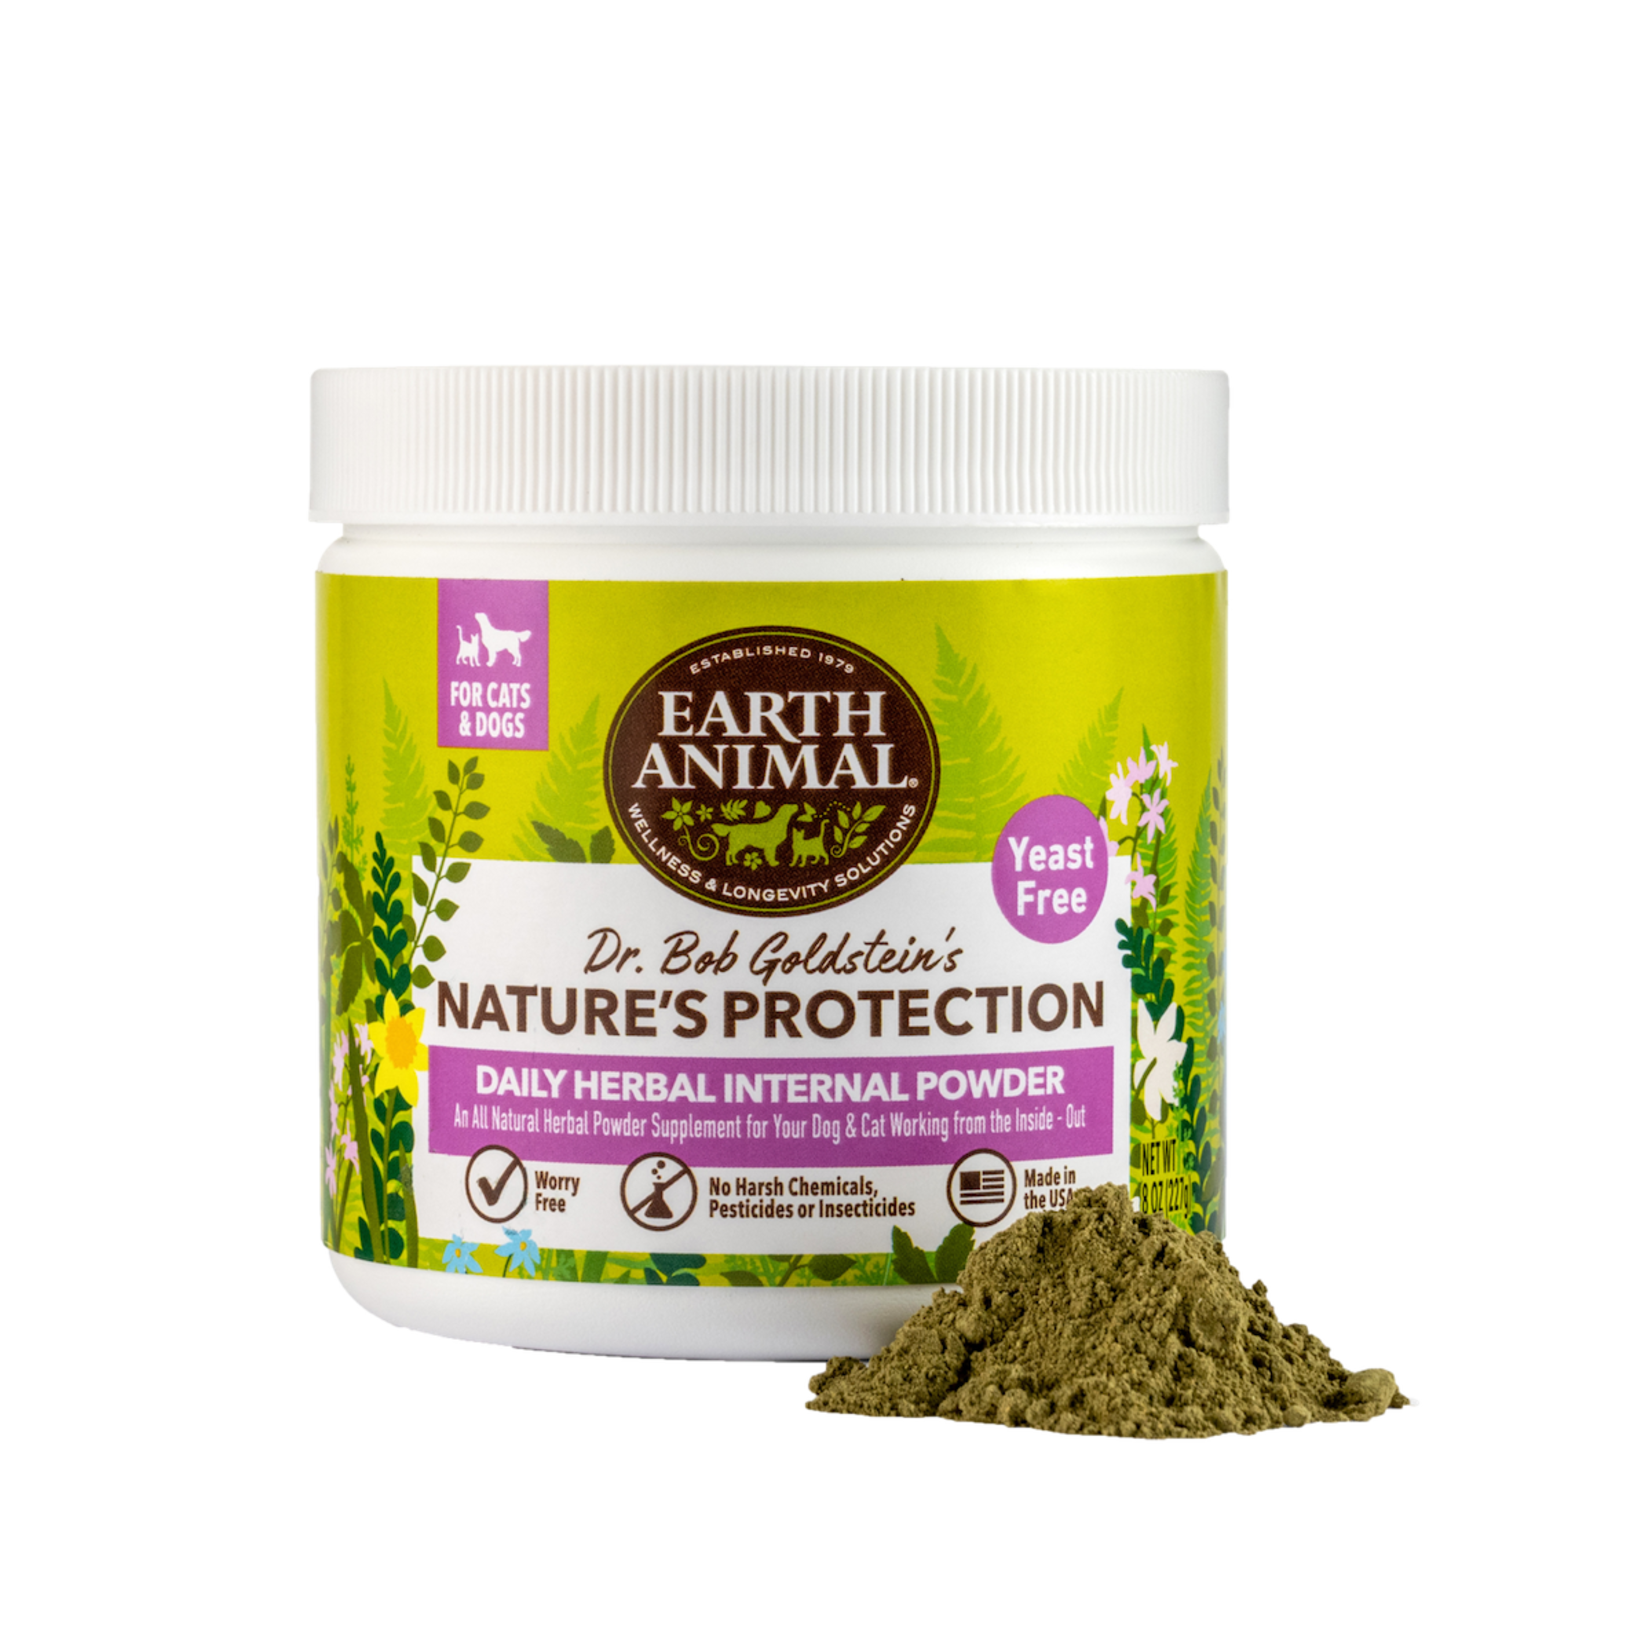 Earth Animal Earth Animal Nature's Protection - Daily Herbal Internal Powder